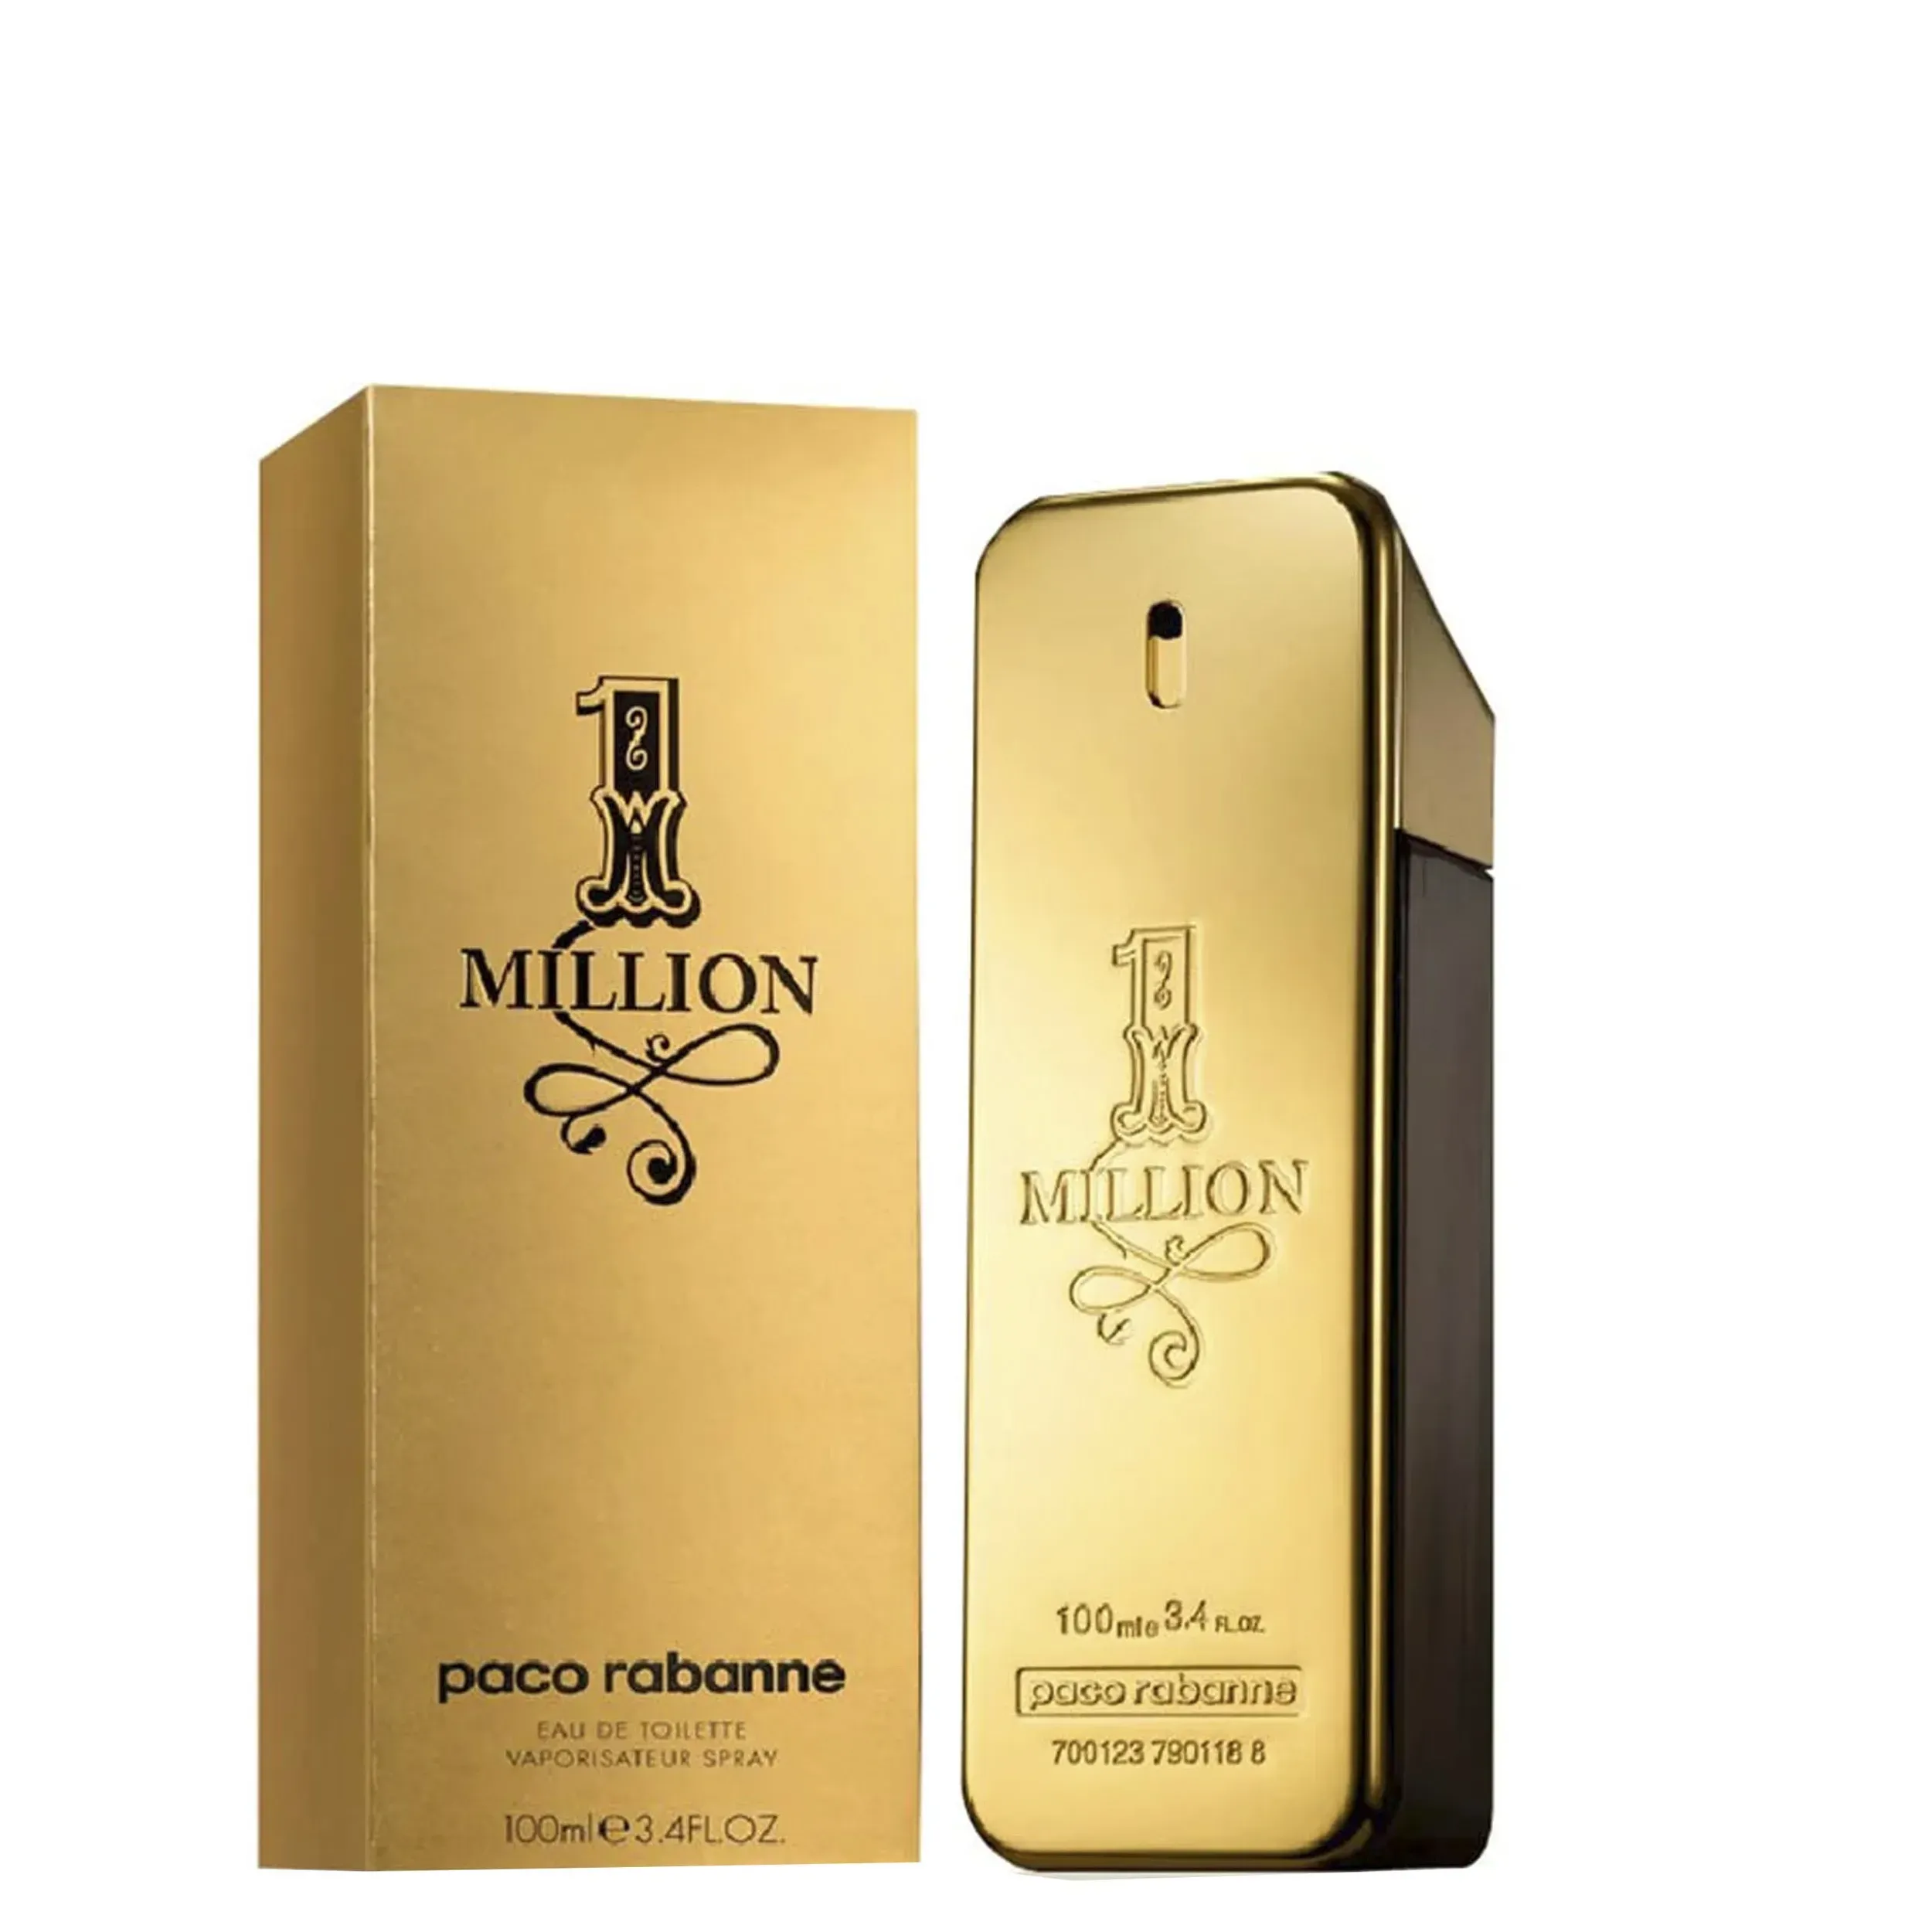 Perfume 1 Million Paco Rabanne  (Replica Importada)- Hombre